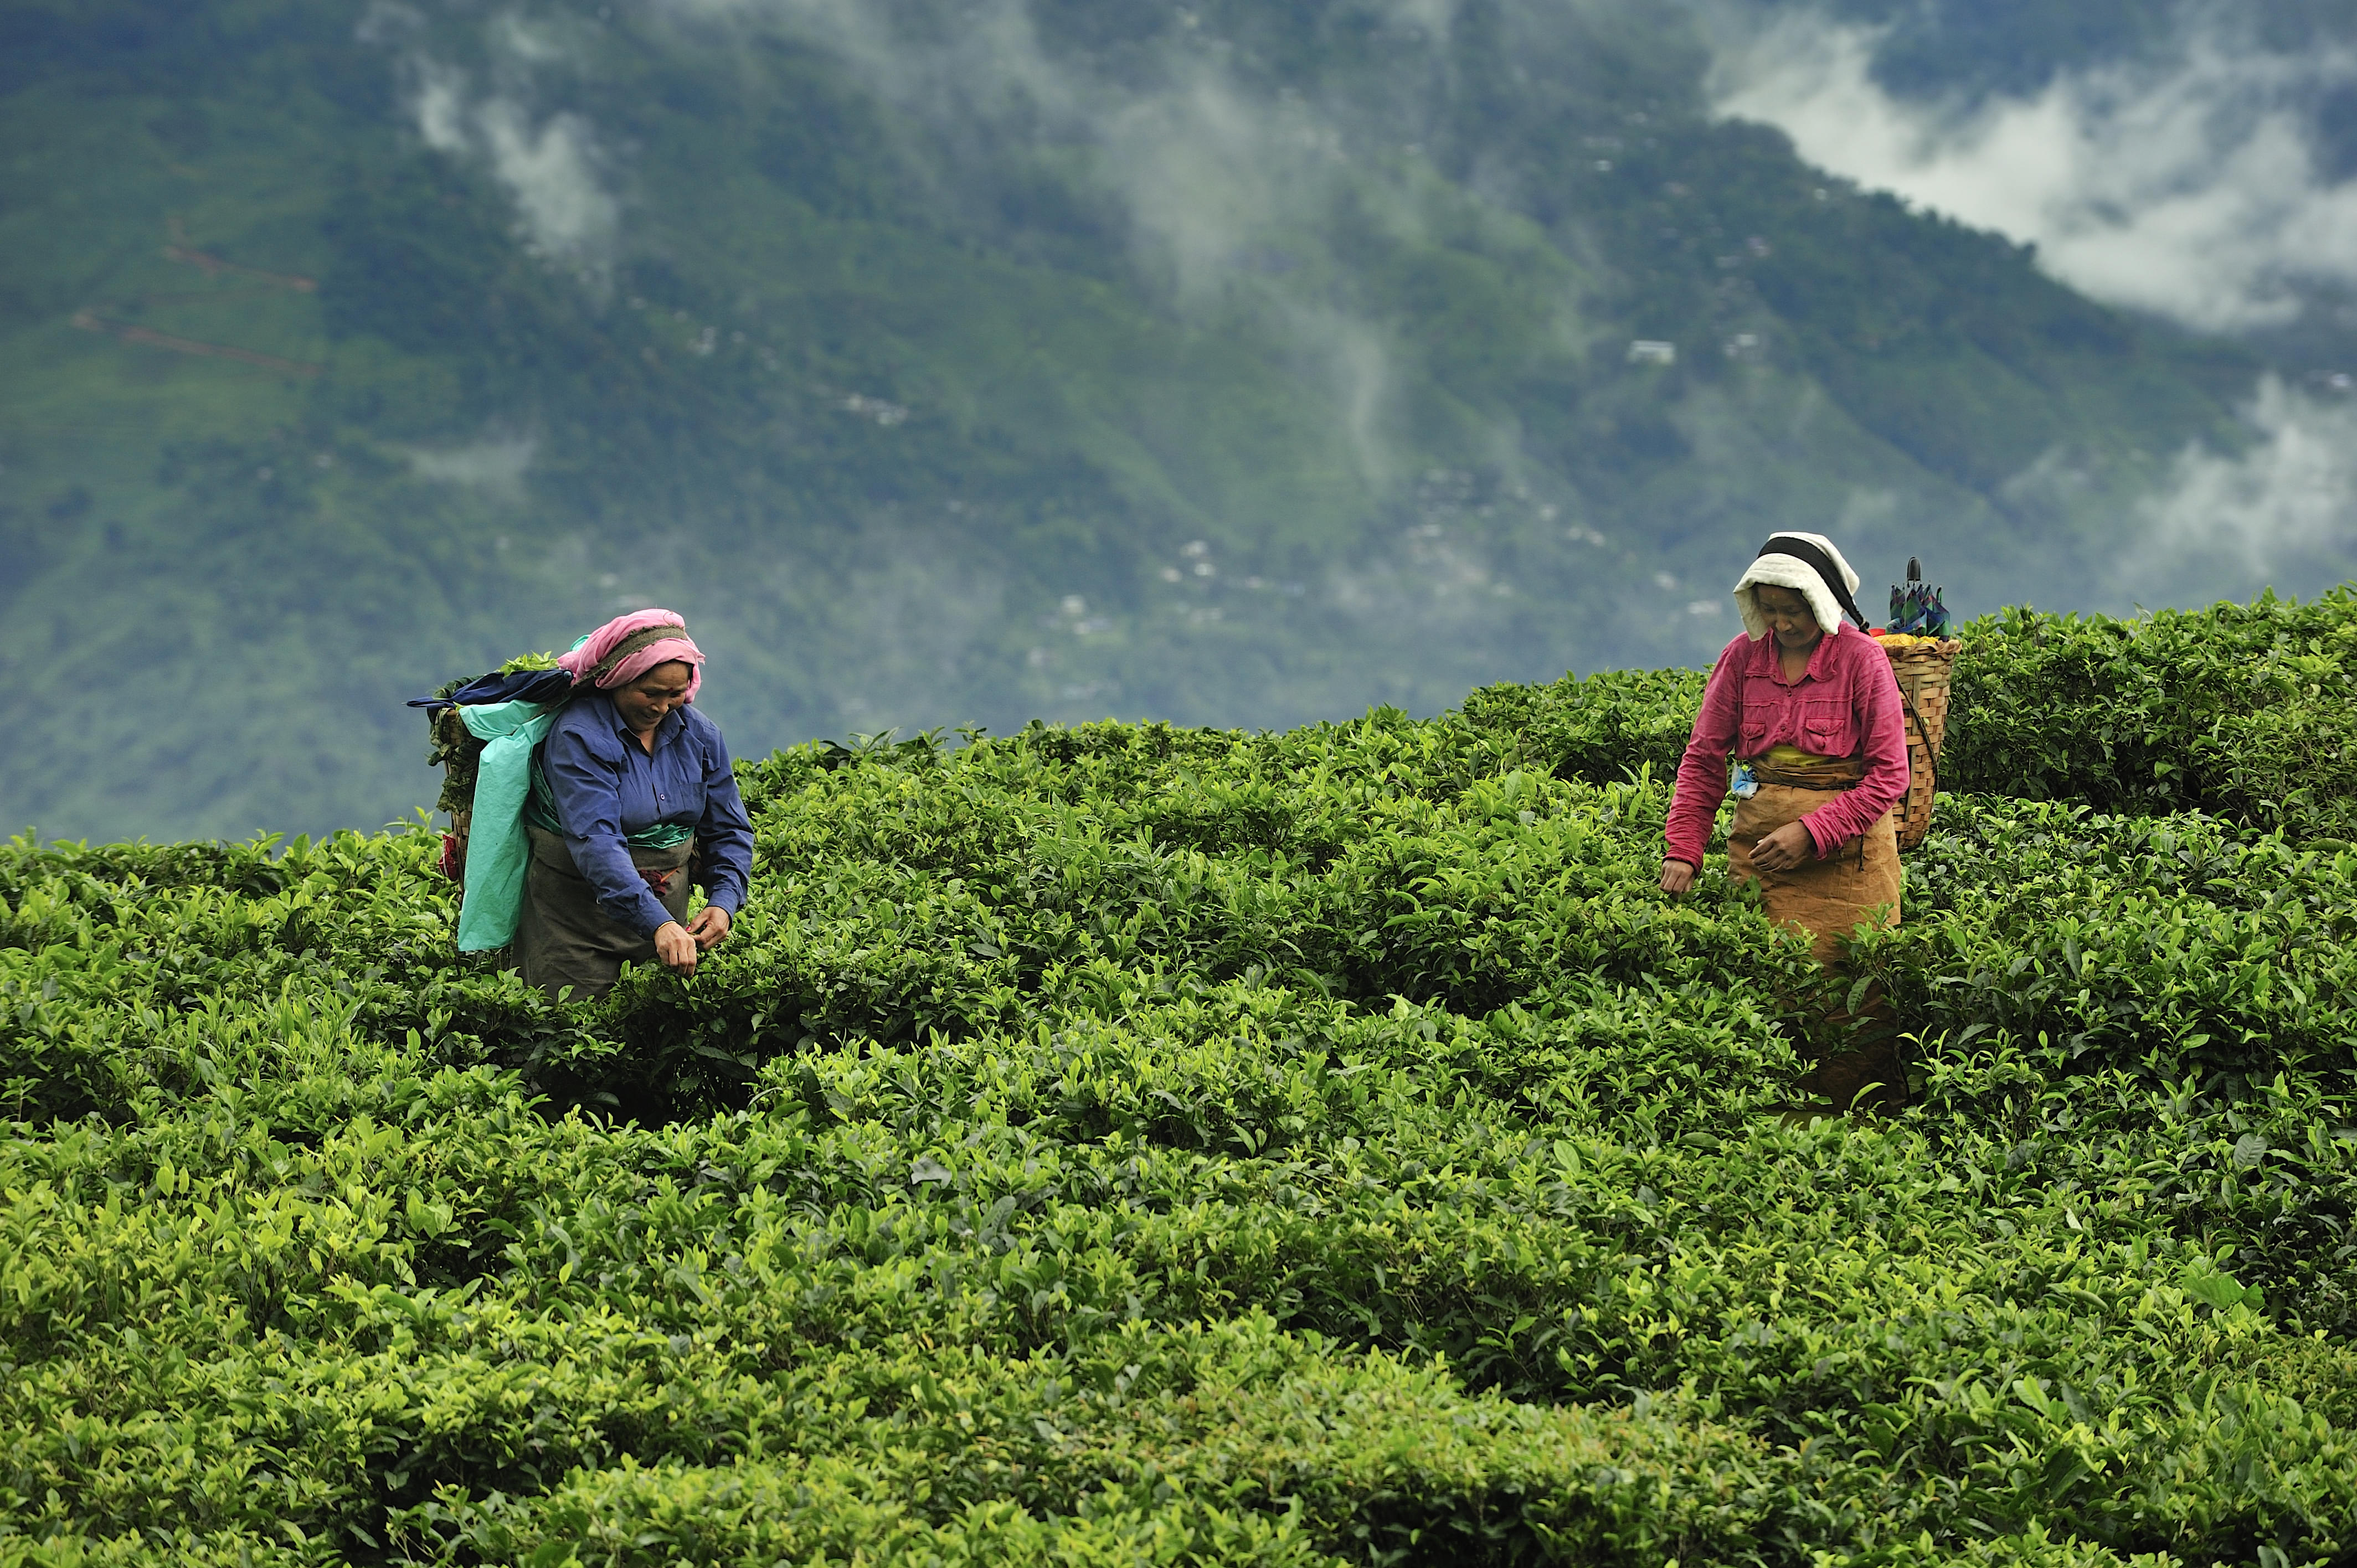 Marvel at the lush tea estates that blanket the rolling hills of Darjeeling